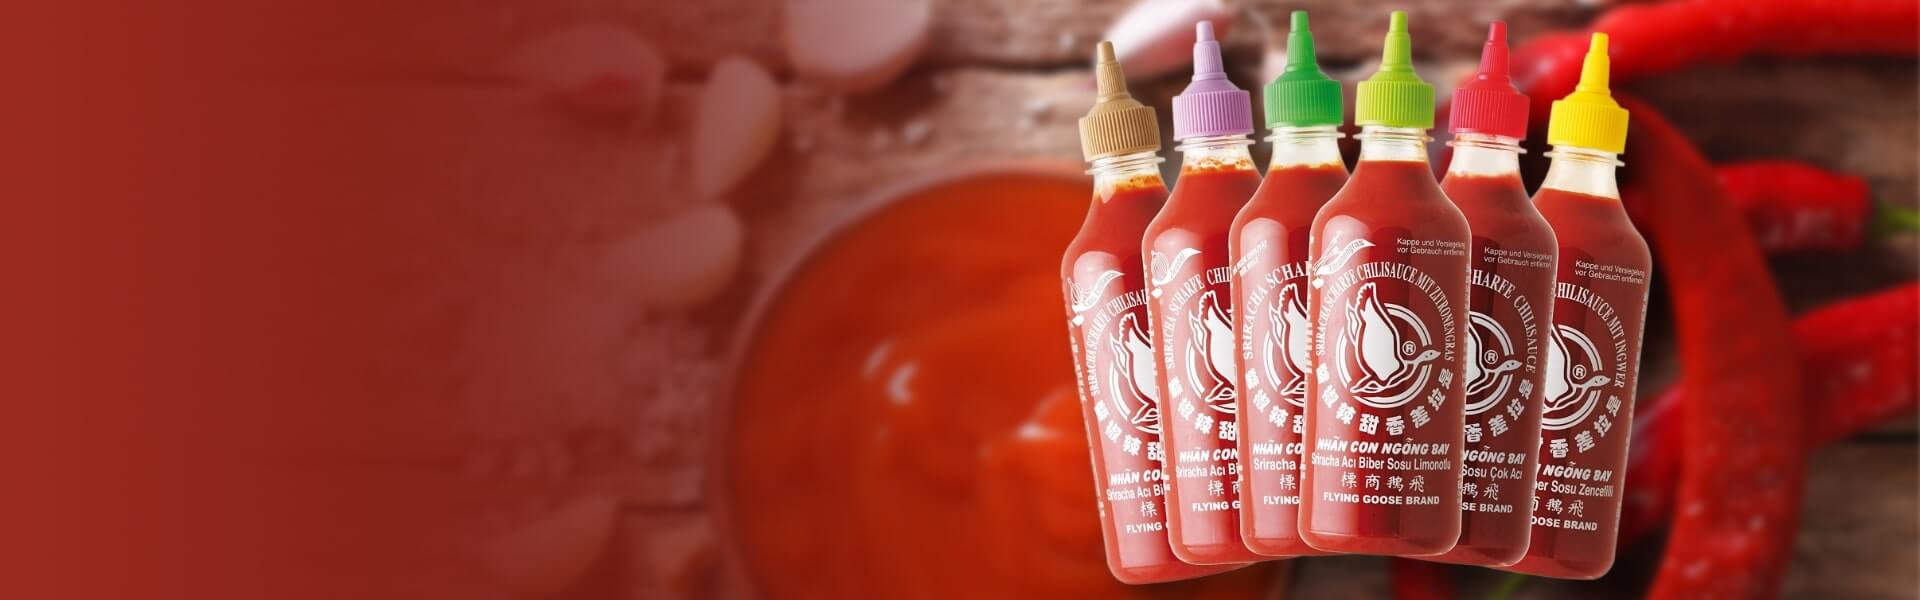 Široká nabídka omáček Sriracha